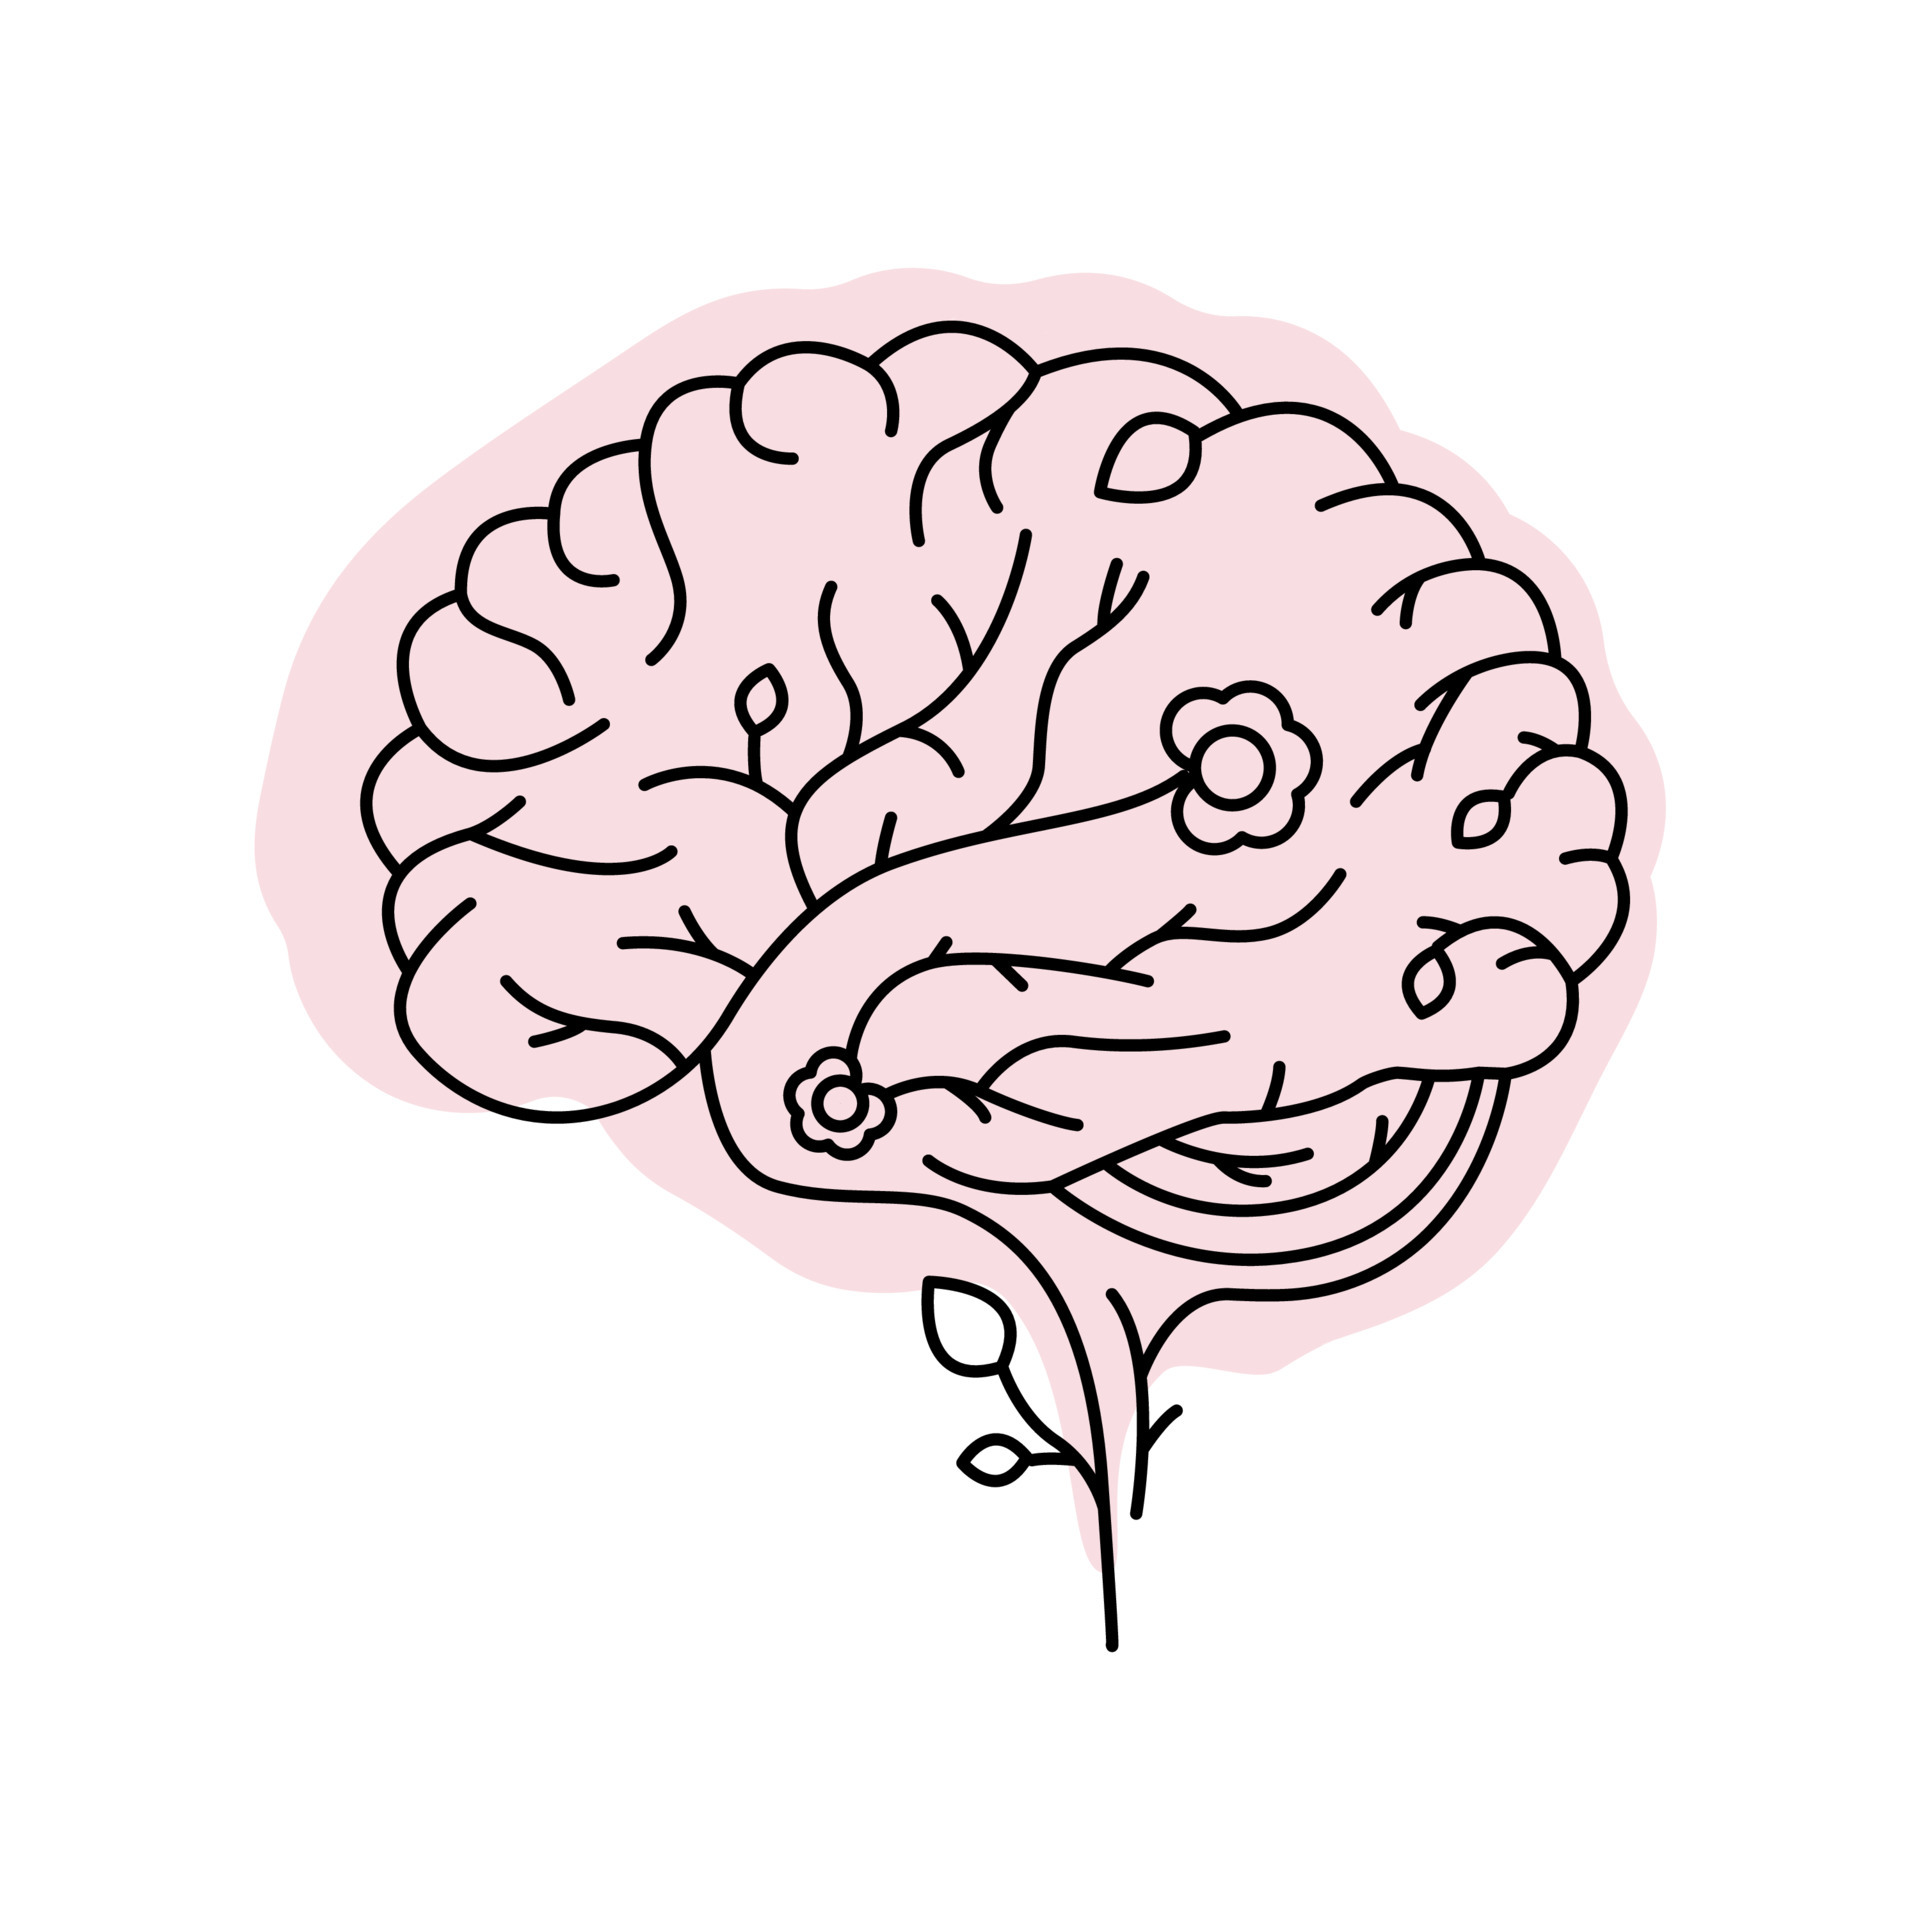 Pink brain clipart representing mental health.